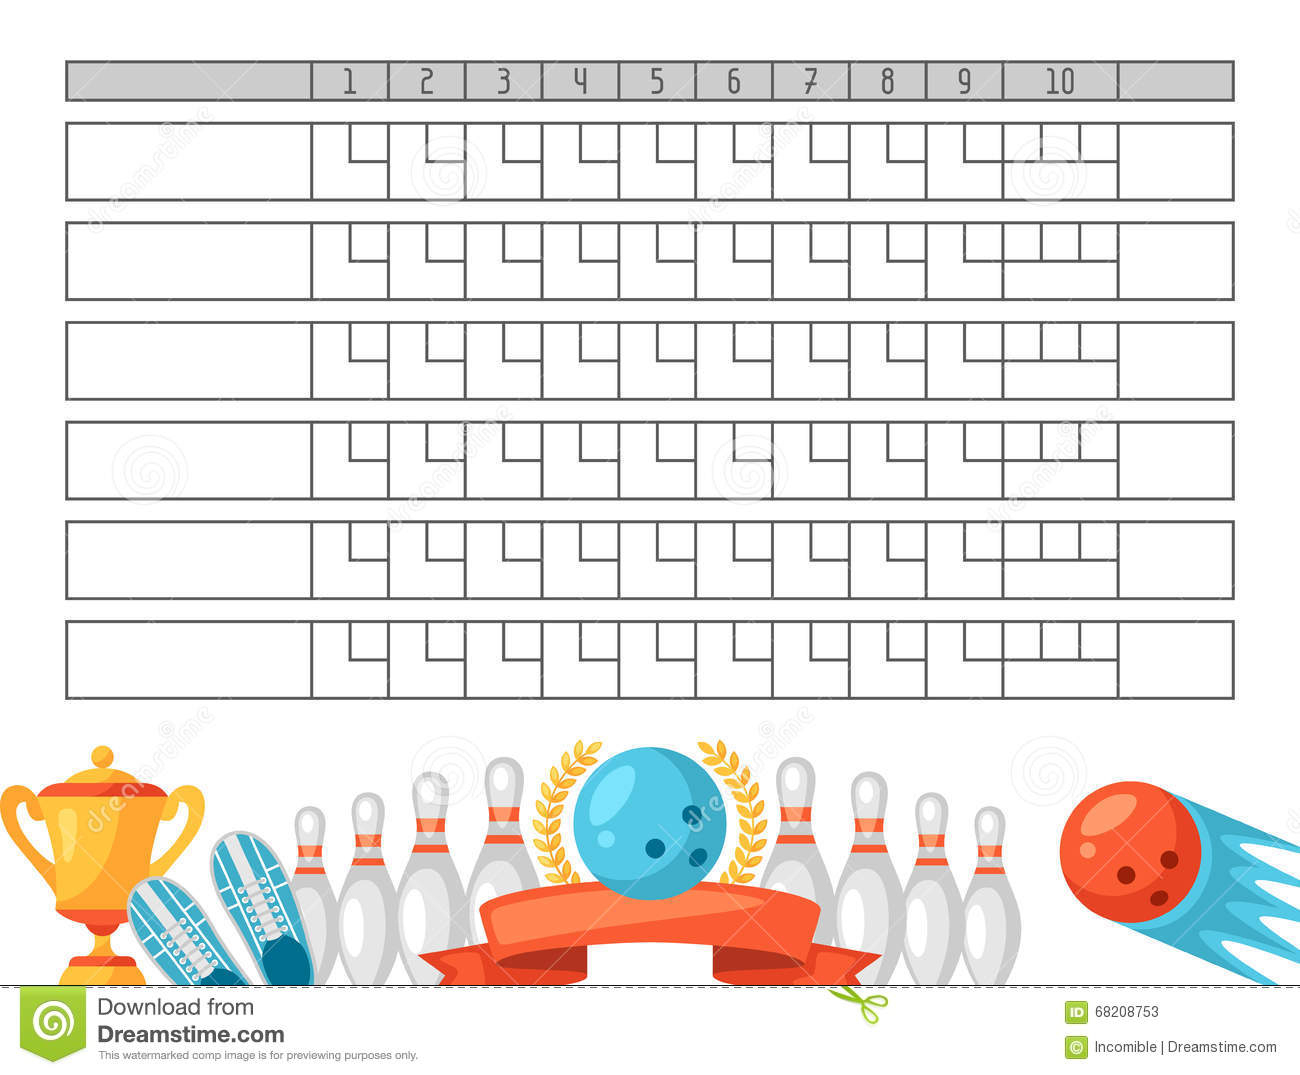 Template: Free Printables Bowling Score Sheet. Bowling Score Sheet - Free Printable Bowling Score Sheets